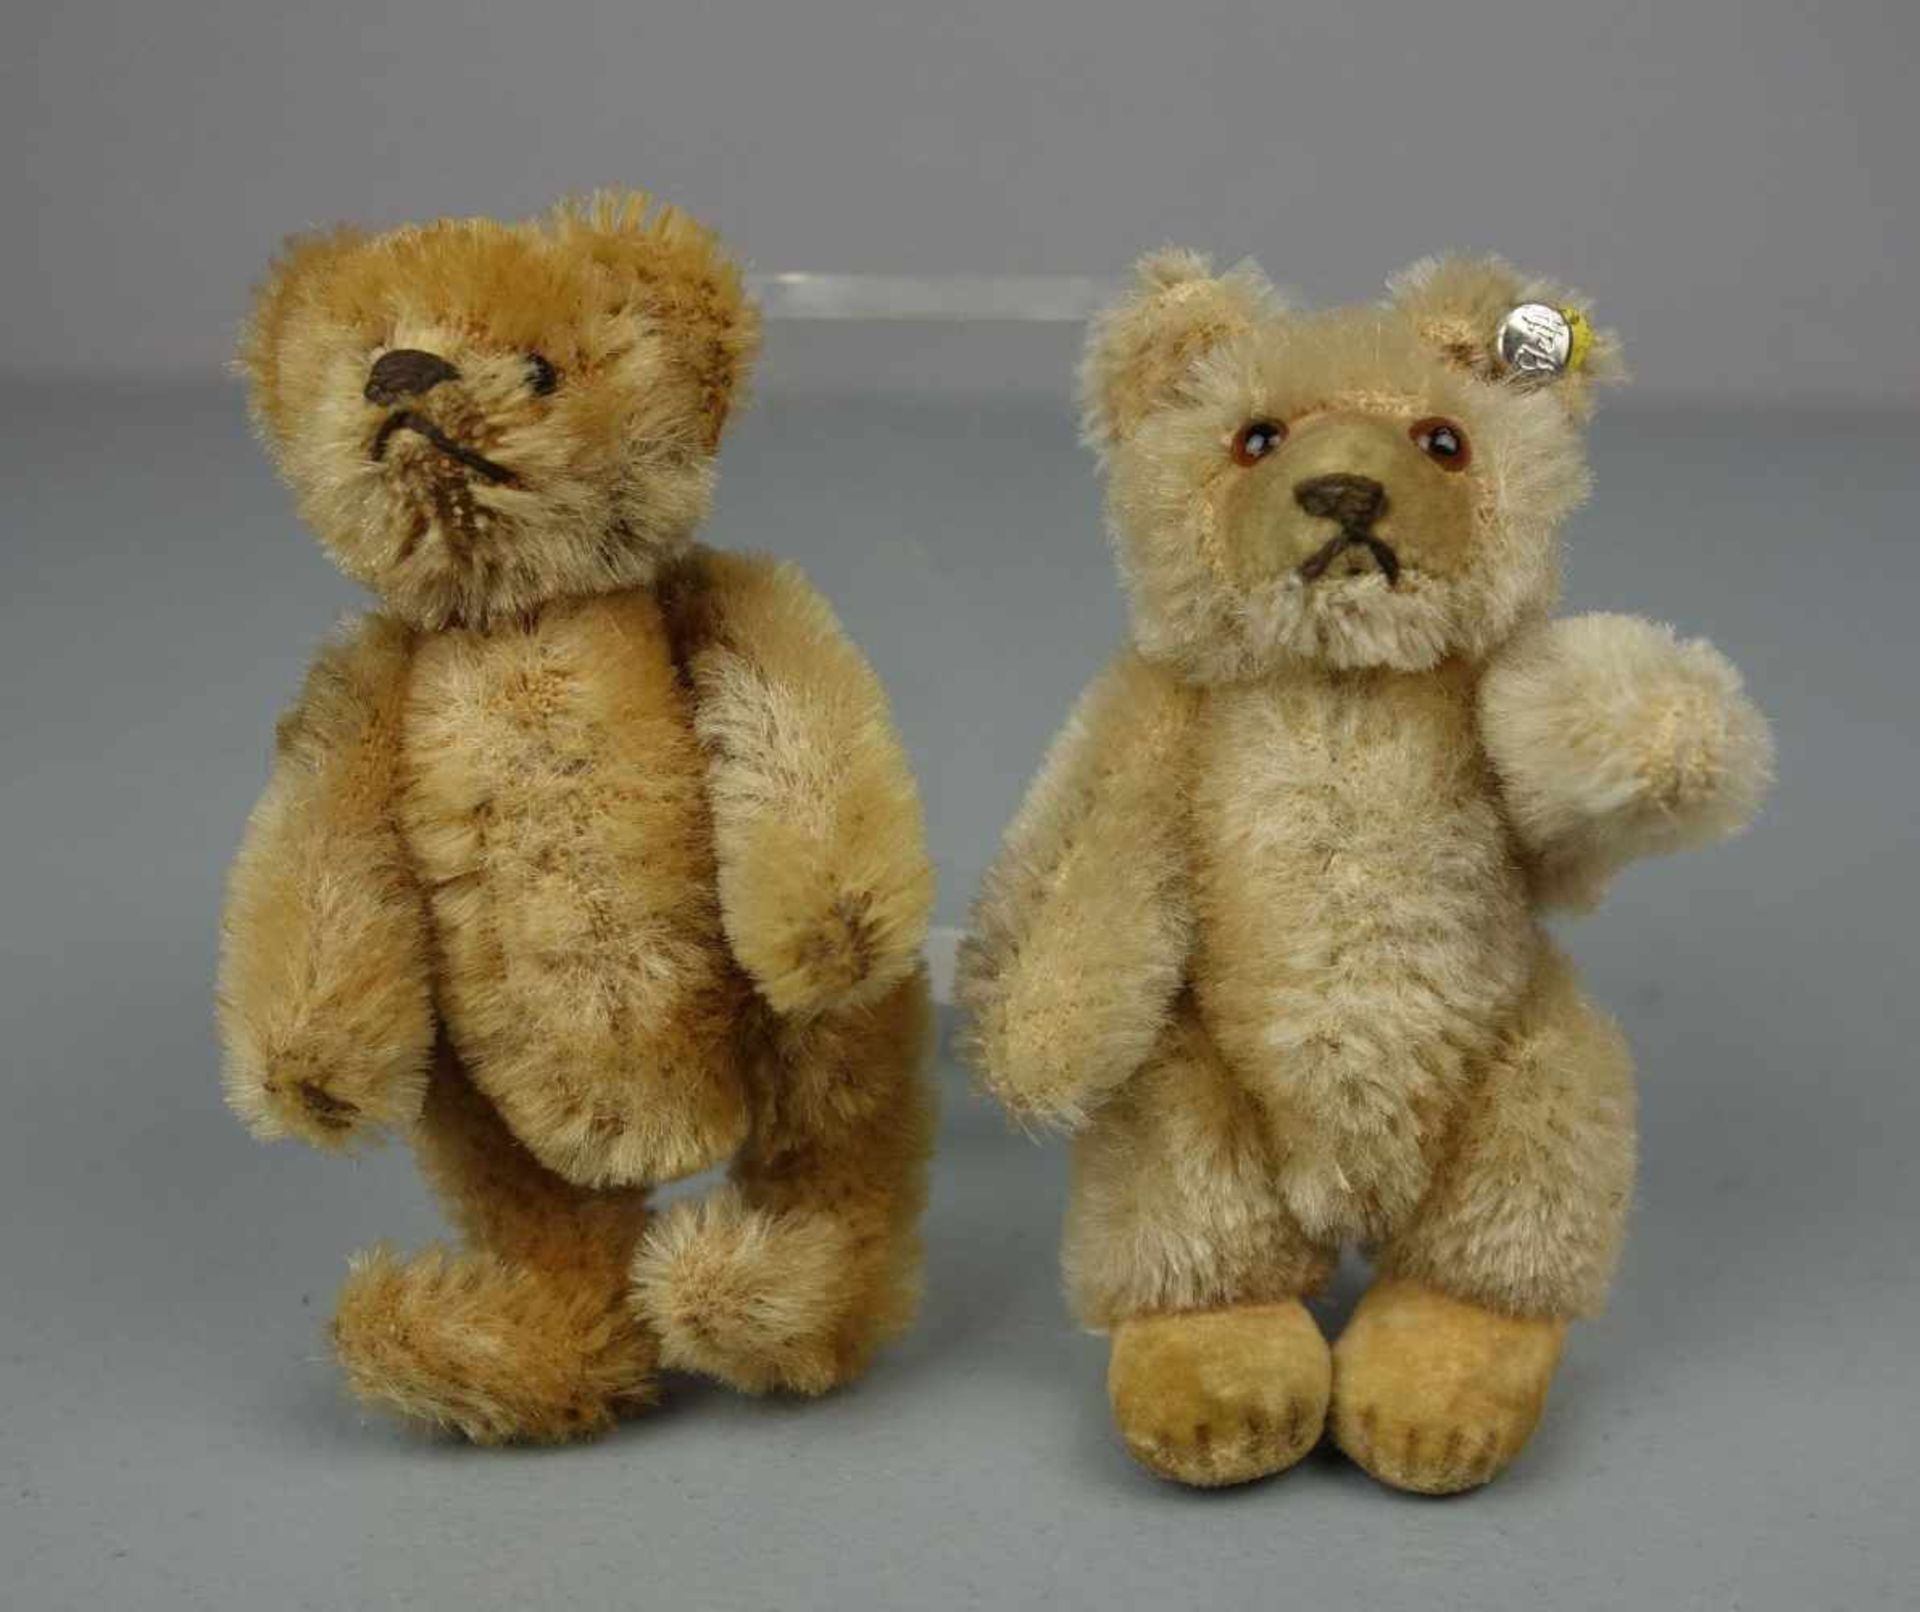 PLÜSCHTIERE / TEDDYBÄREN: Konvolut Miniatur Teddys / Bären - 6 Stück / six teddy bears, 20. Jh., - Bild 4 aus 8